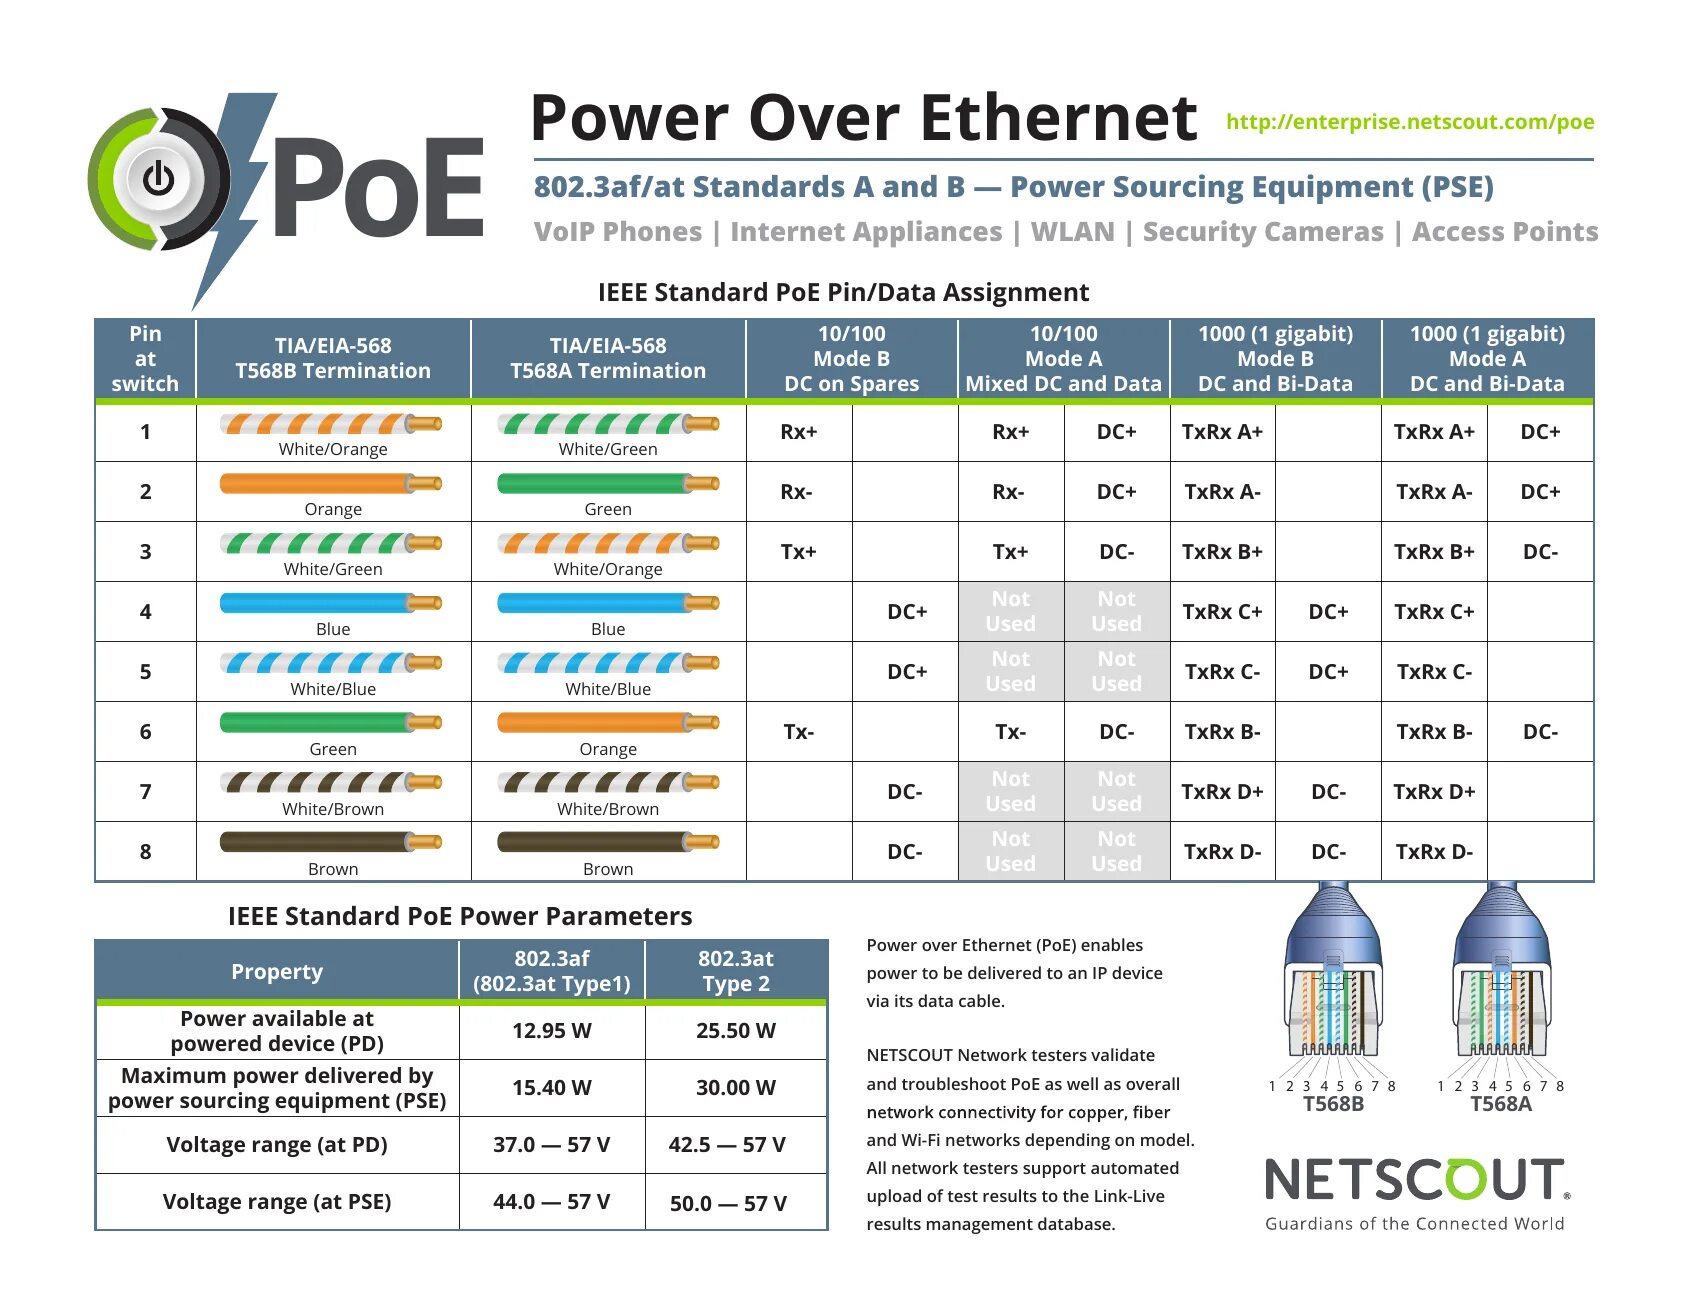 Poe длина. POE 802.3at распиновка. POE стандарты 802.3af/at. Power over Ethernet (POE; стандарт IEEE 802.3af (802.3at Type 1. POE 802.3af распиновка.